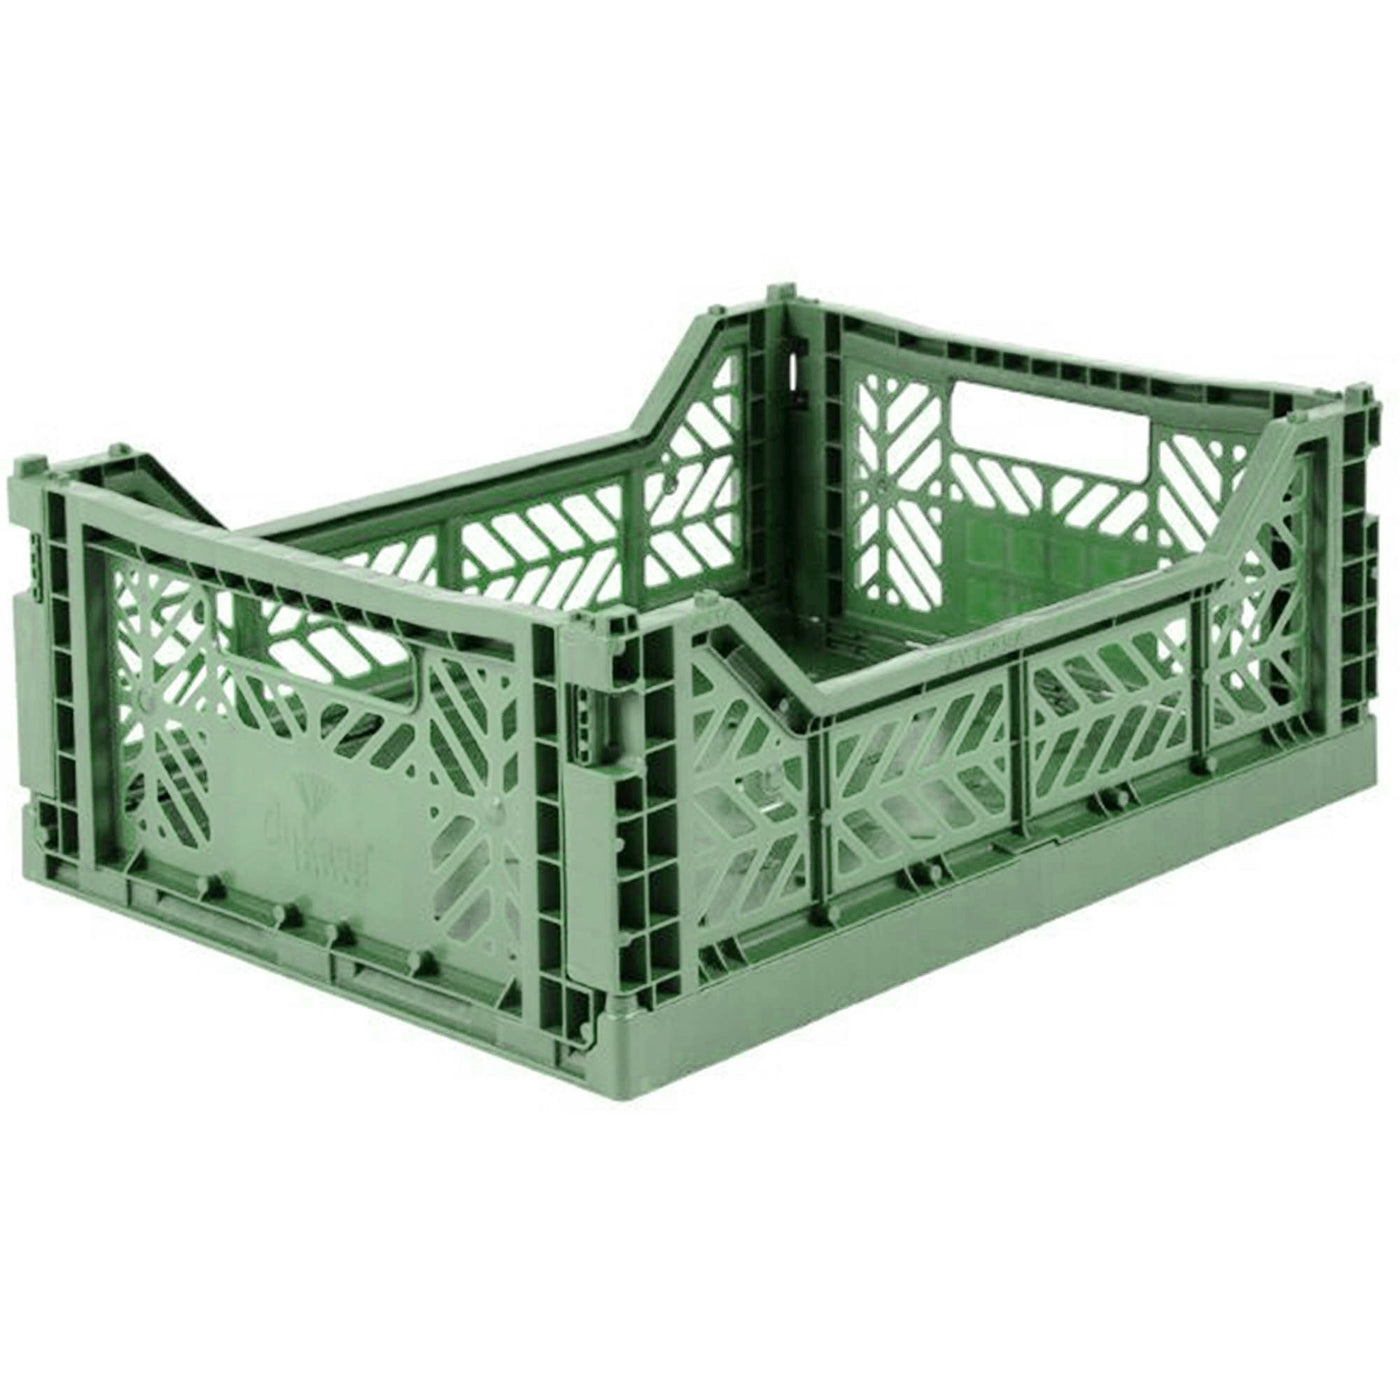 Midi Folding Storage Crate - Almond Green